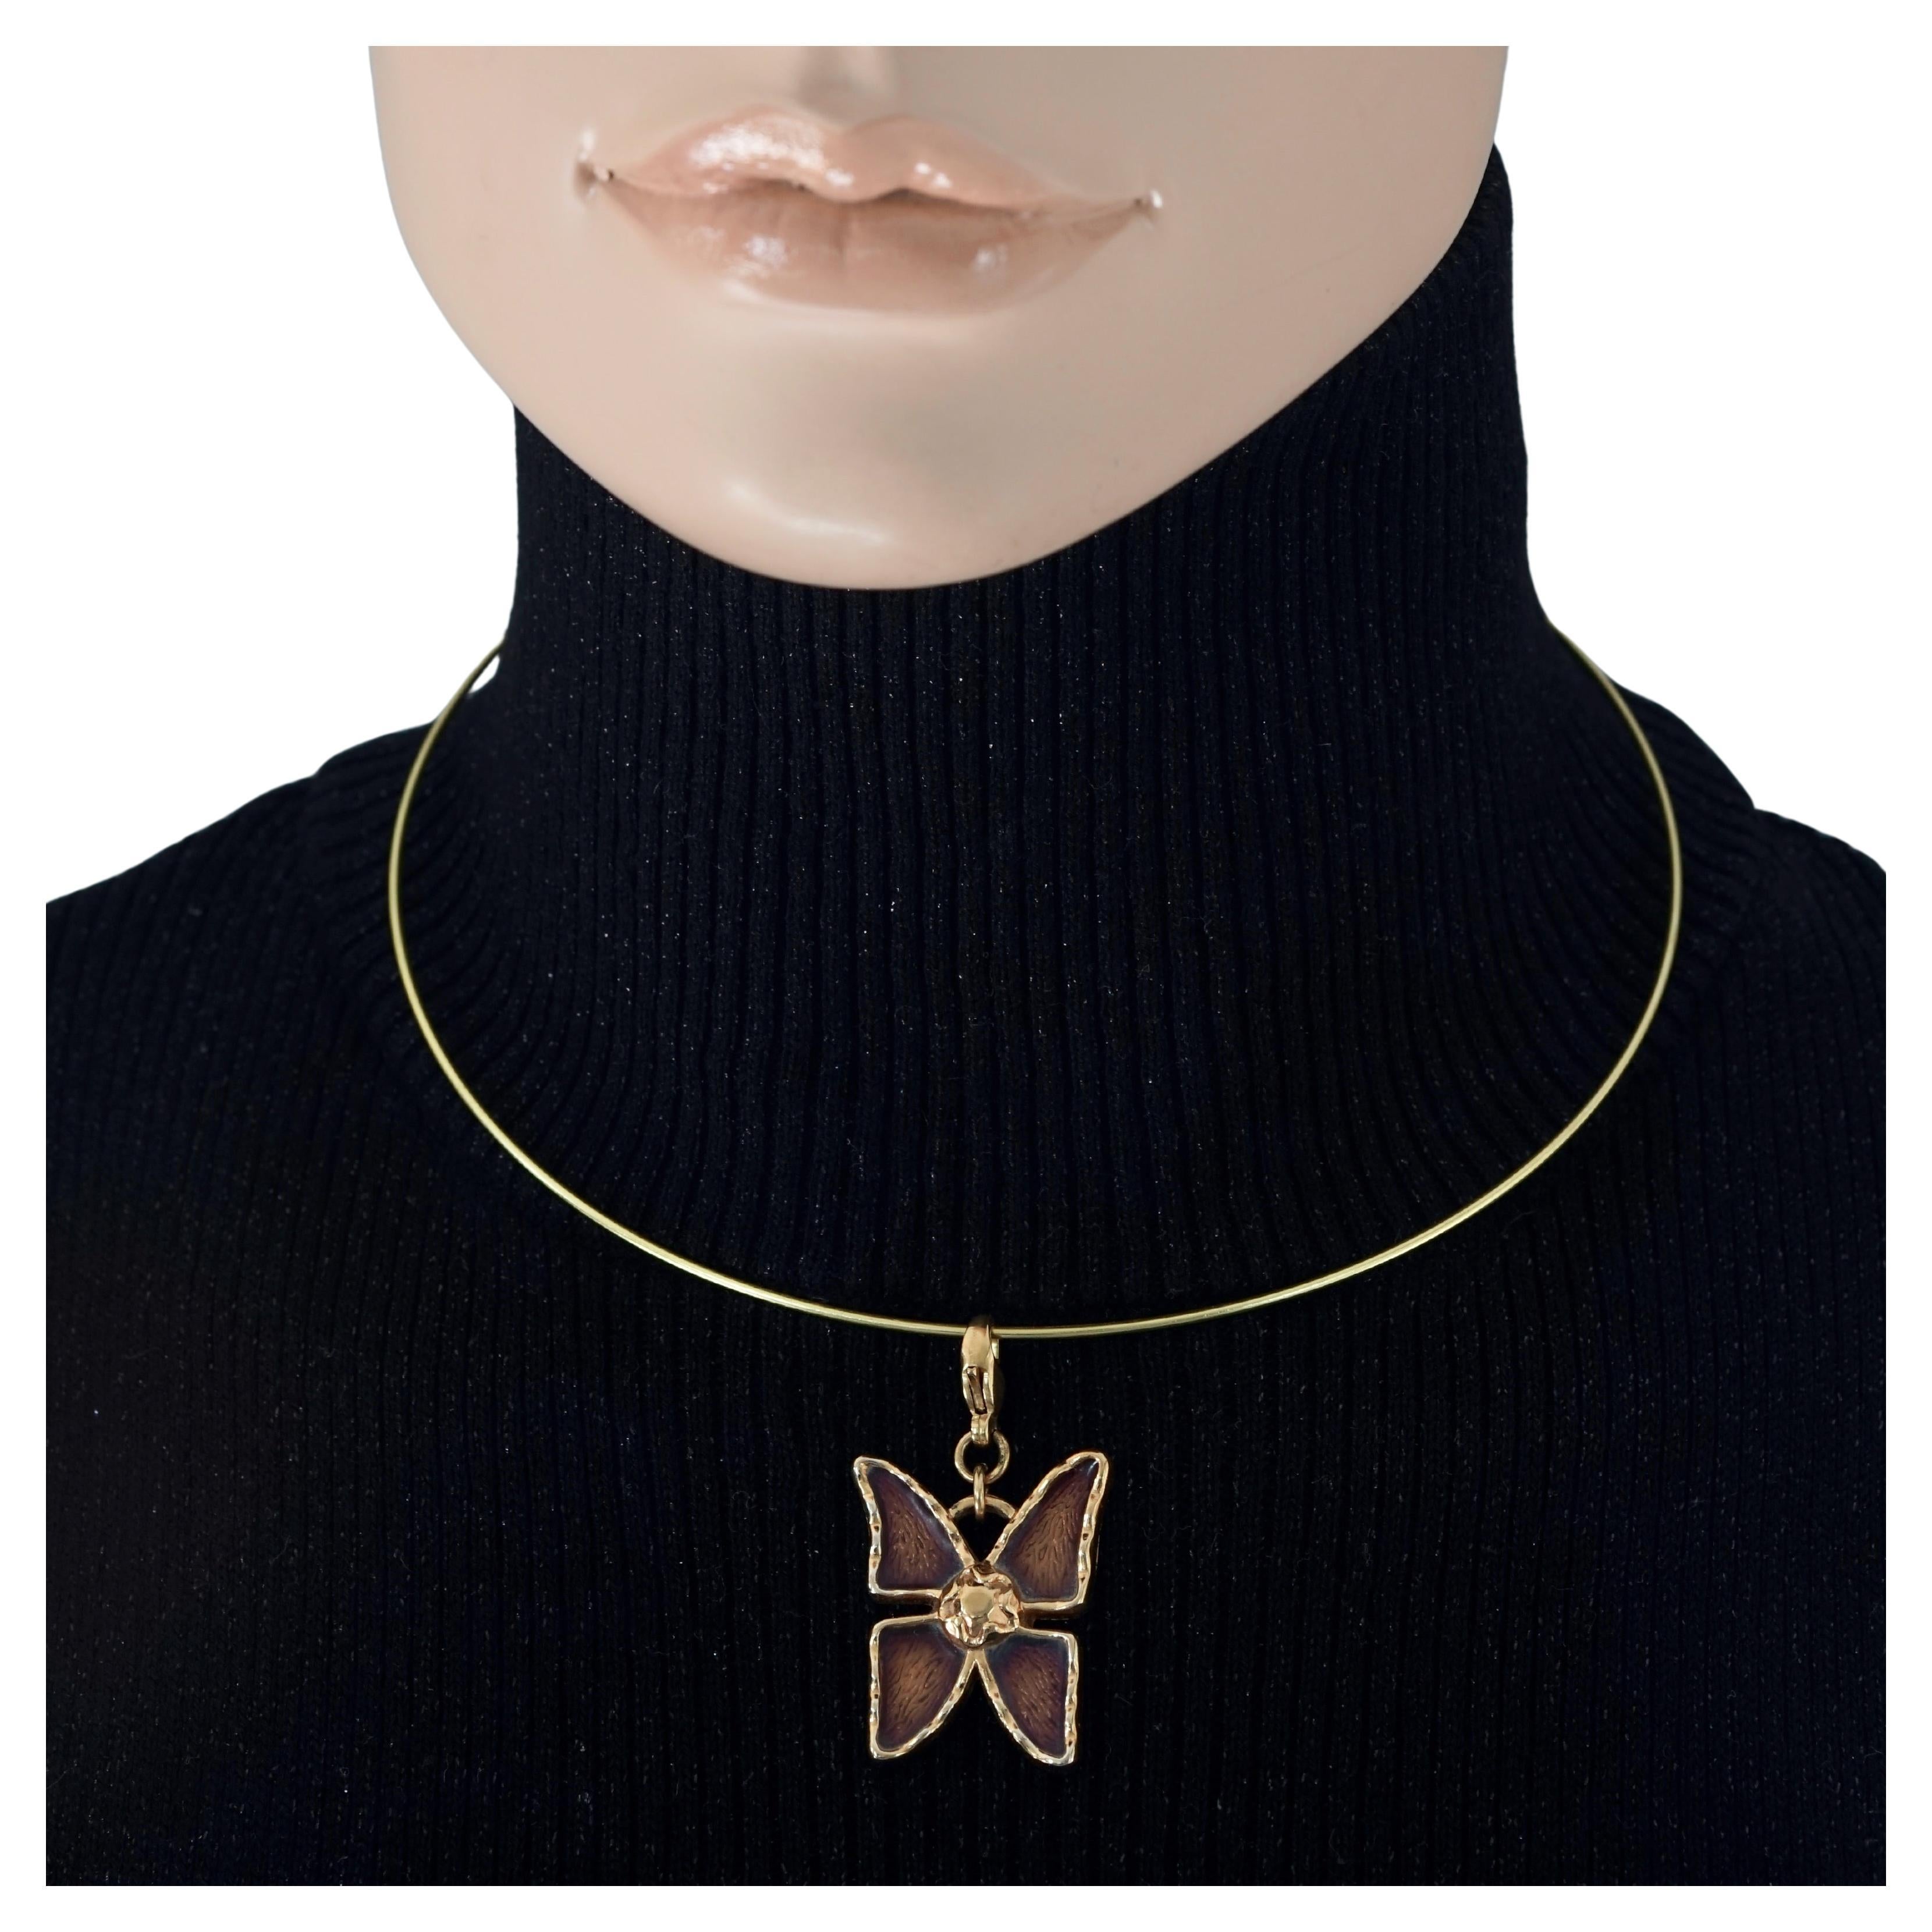 Yves Saint Laurent Necklace Pendant - 58 For Sale on 1stDibs 